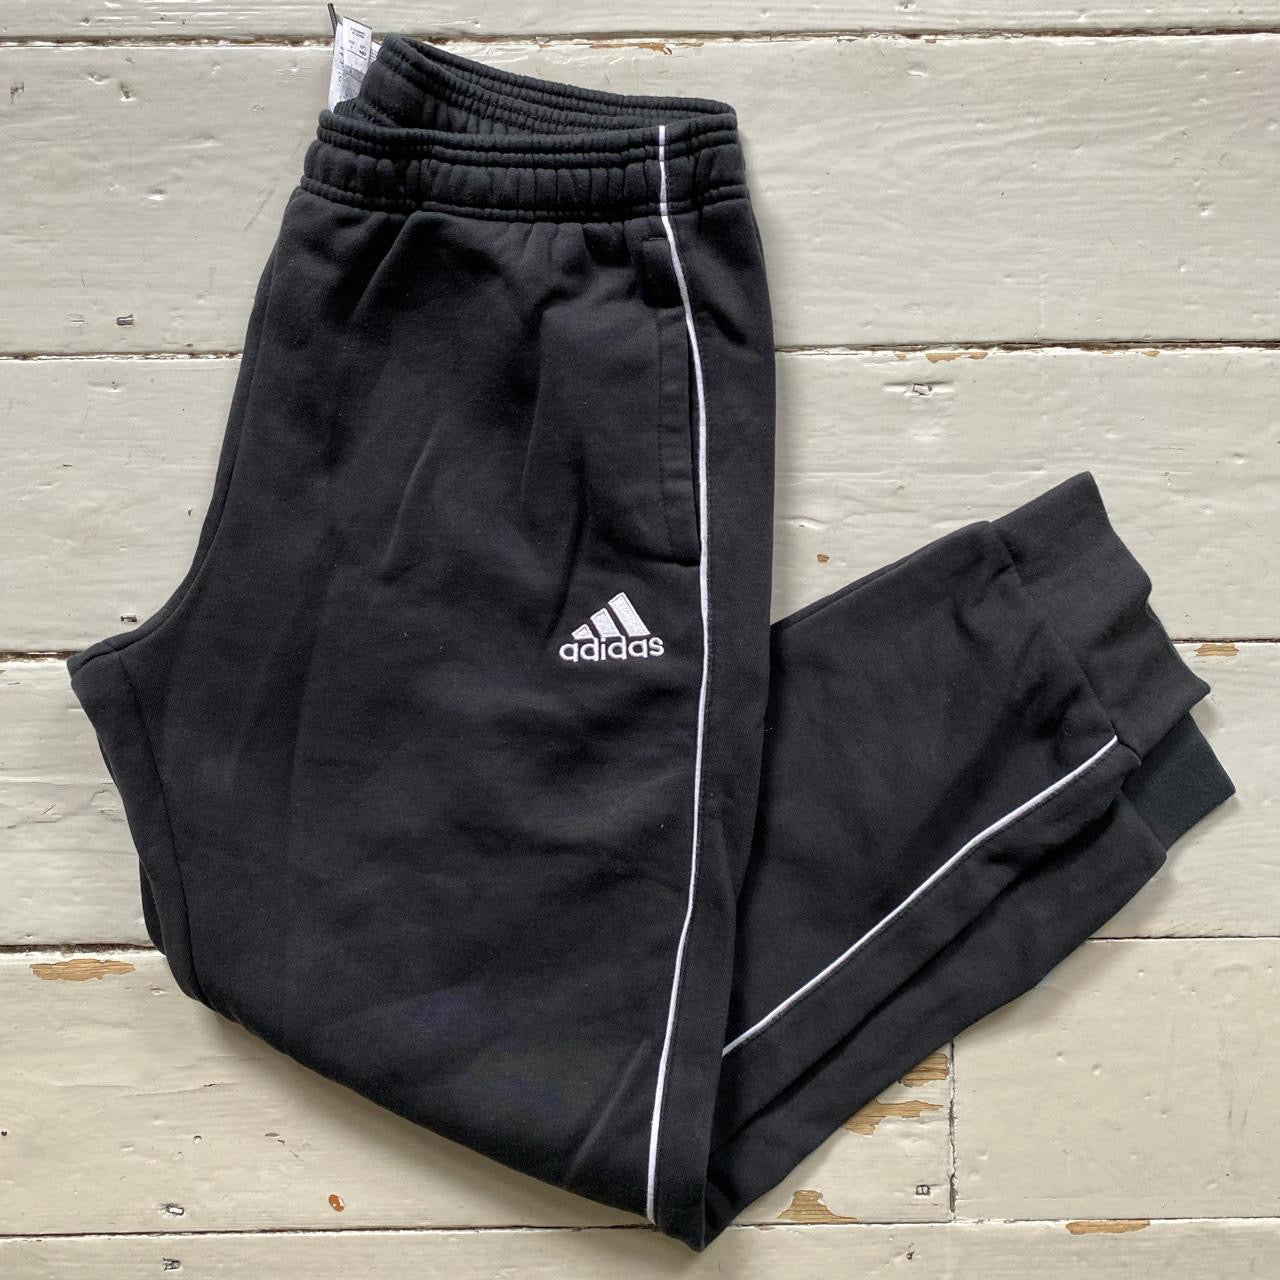 Adidas Black and White Joggers (Large)